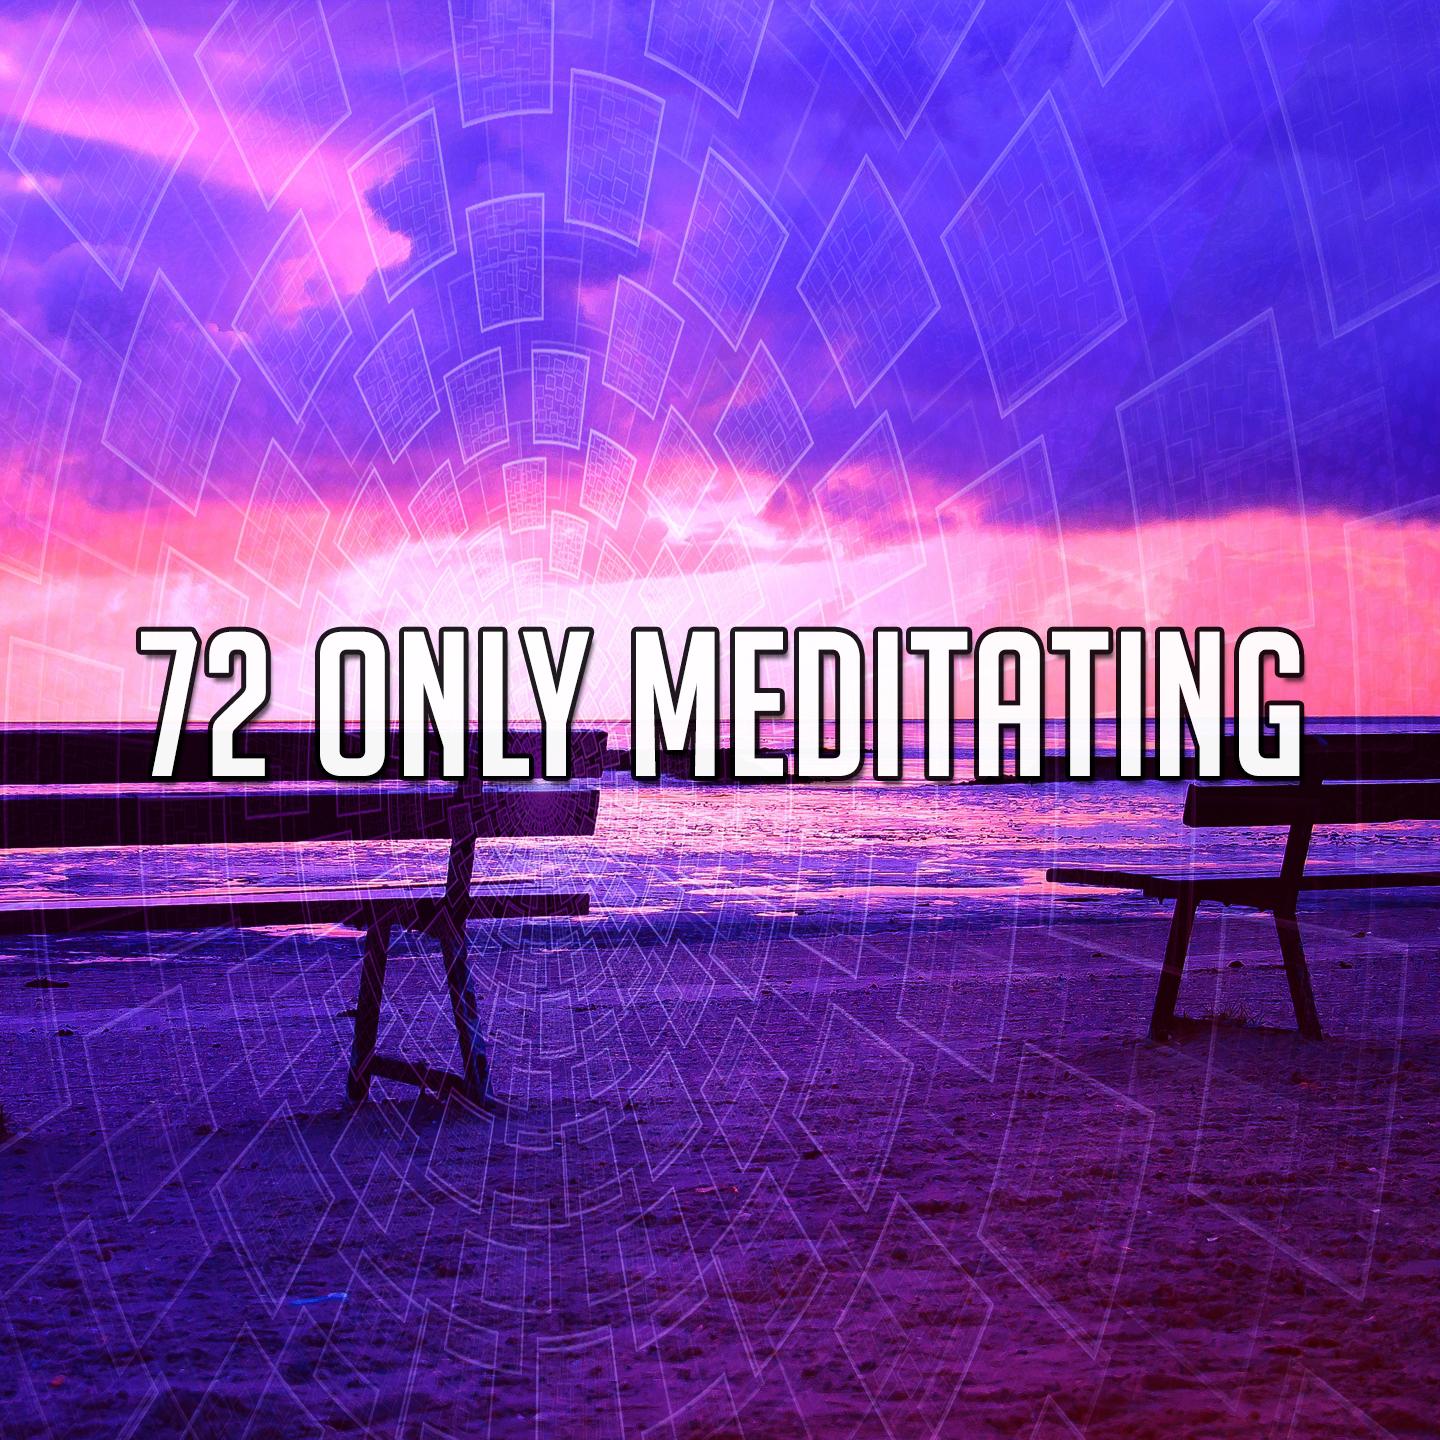 72 Only Meditating